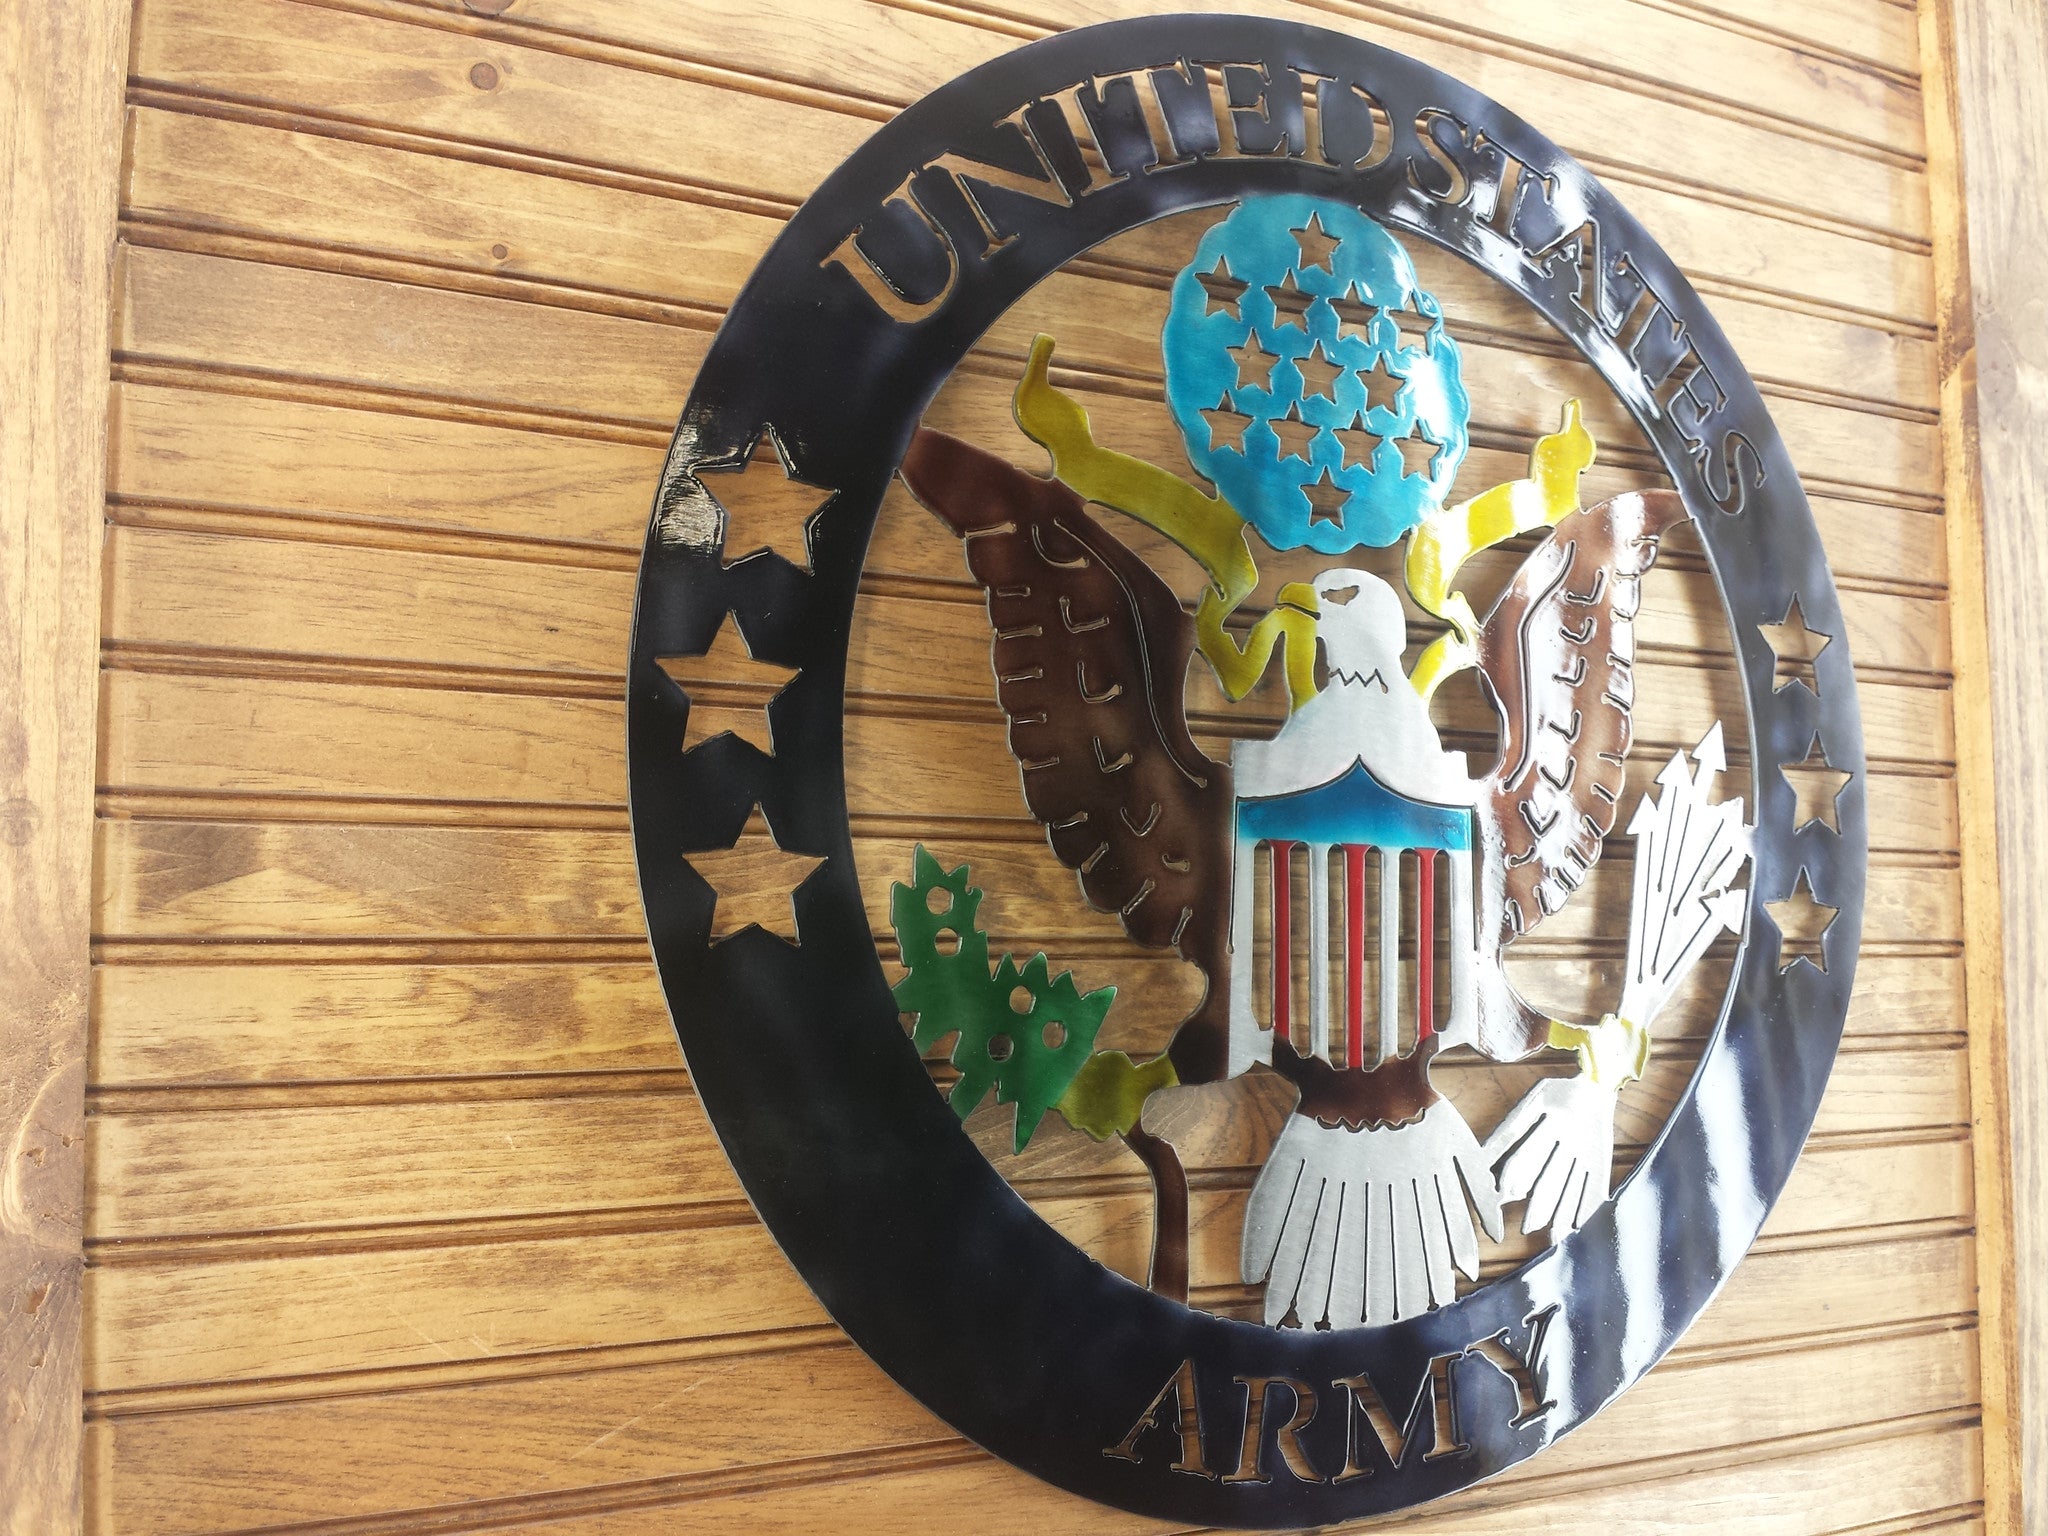 US Army insignia